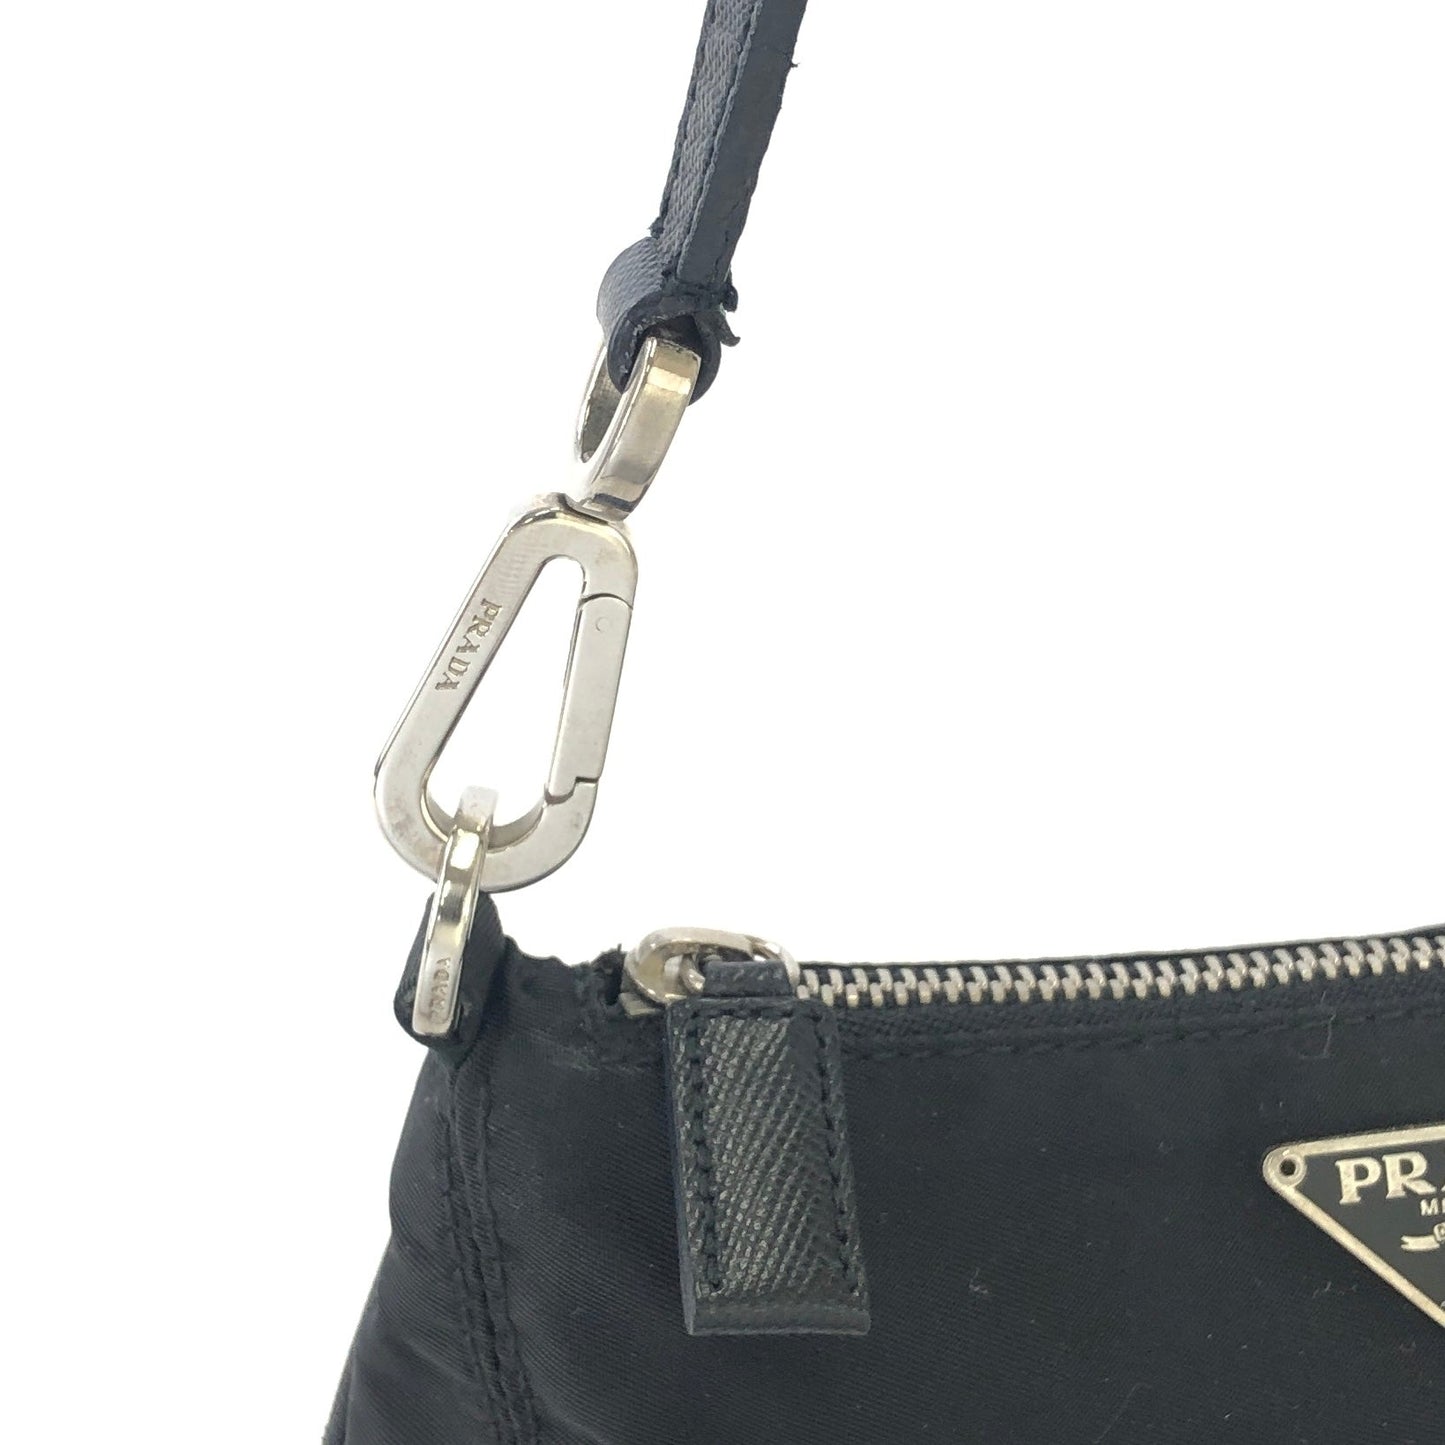 PRADA Triangle logo Nylon Small Handbag Black Vintage Old v35kab